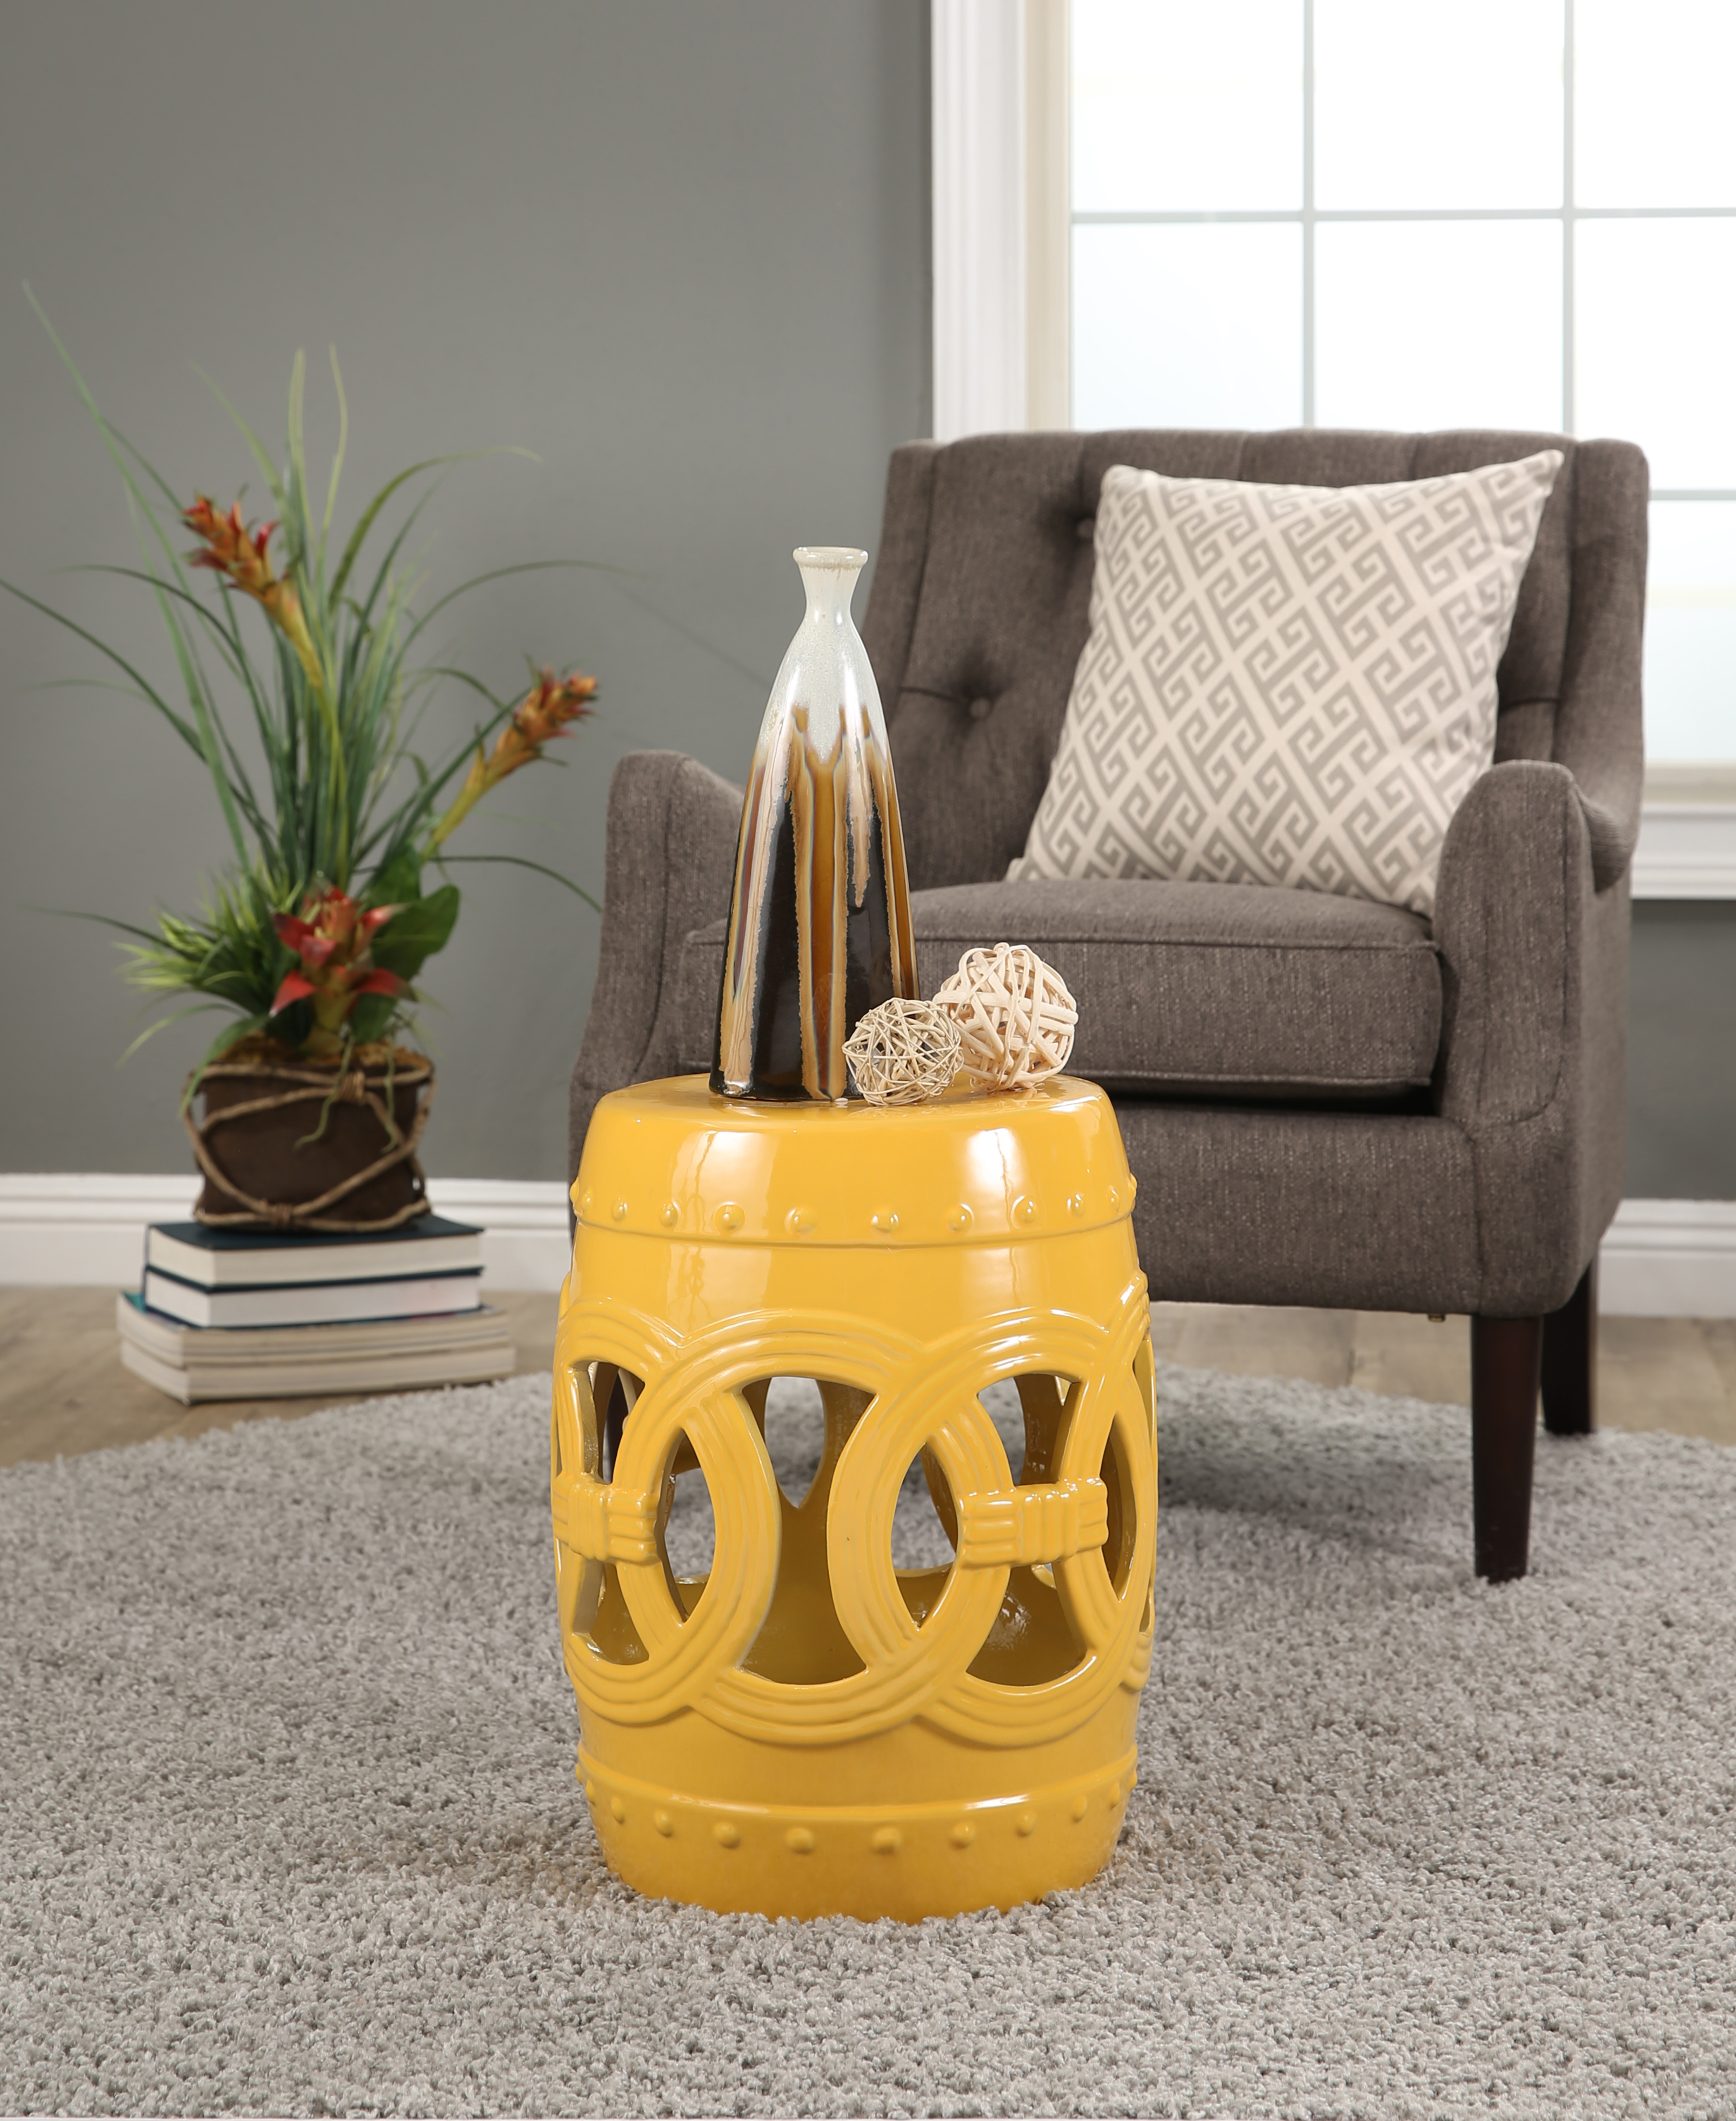 Abbyson Living ceramic garden stool